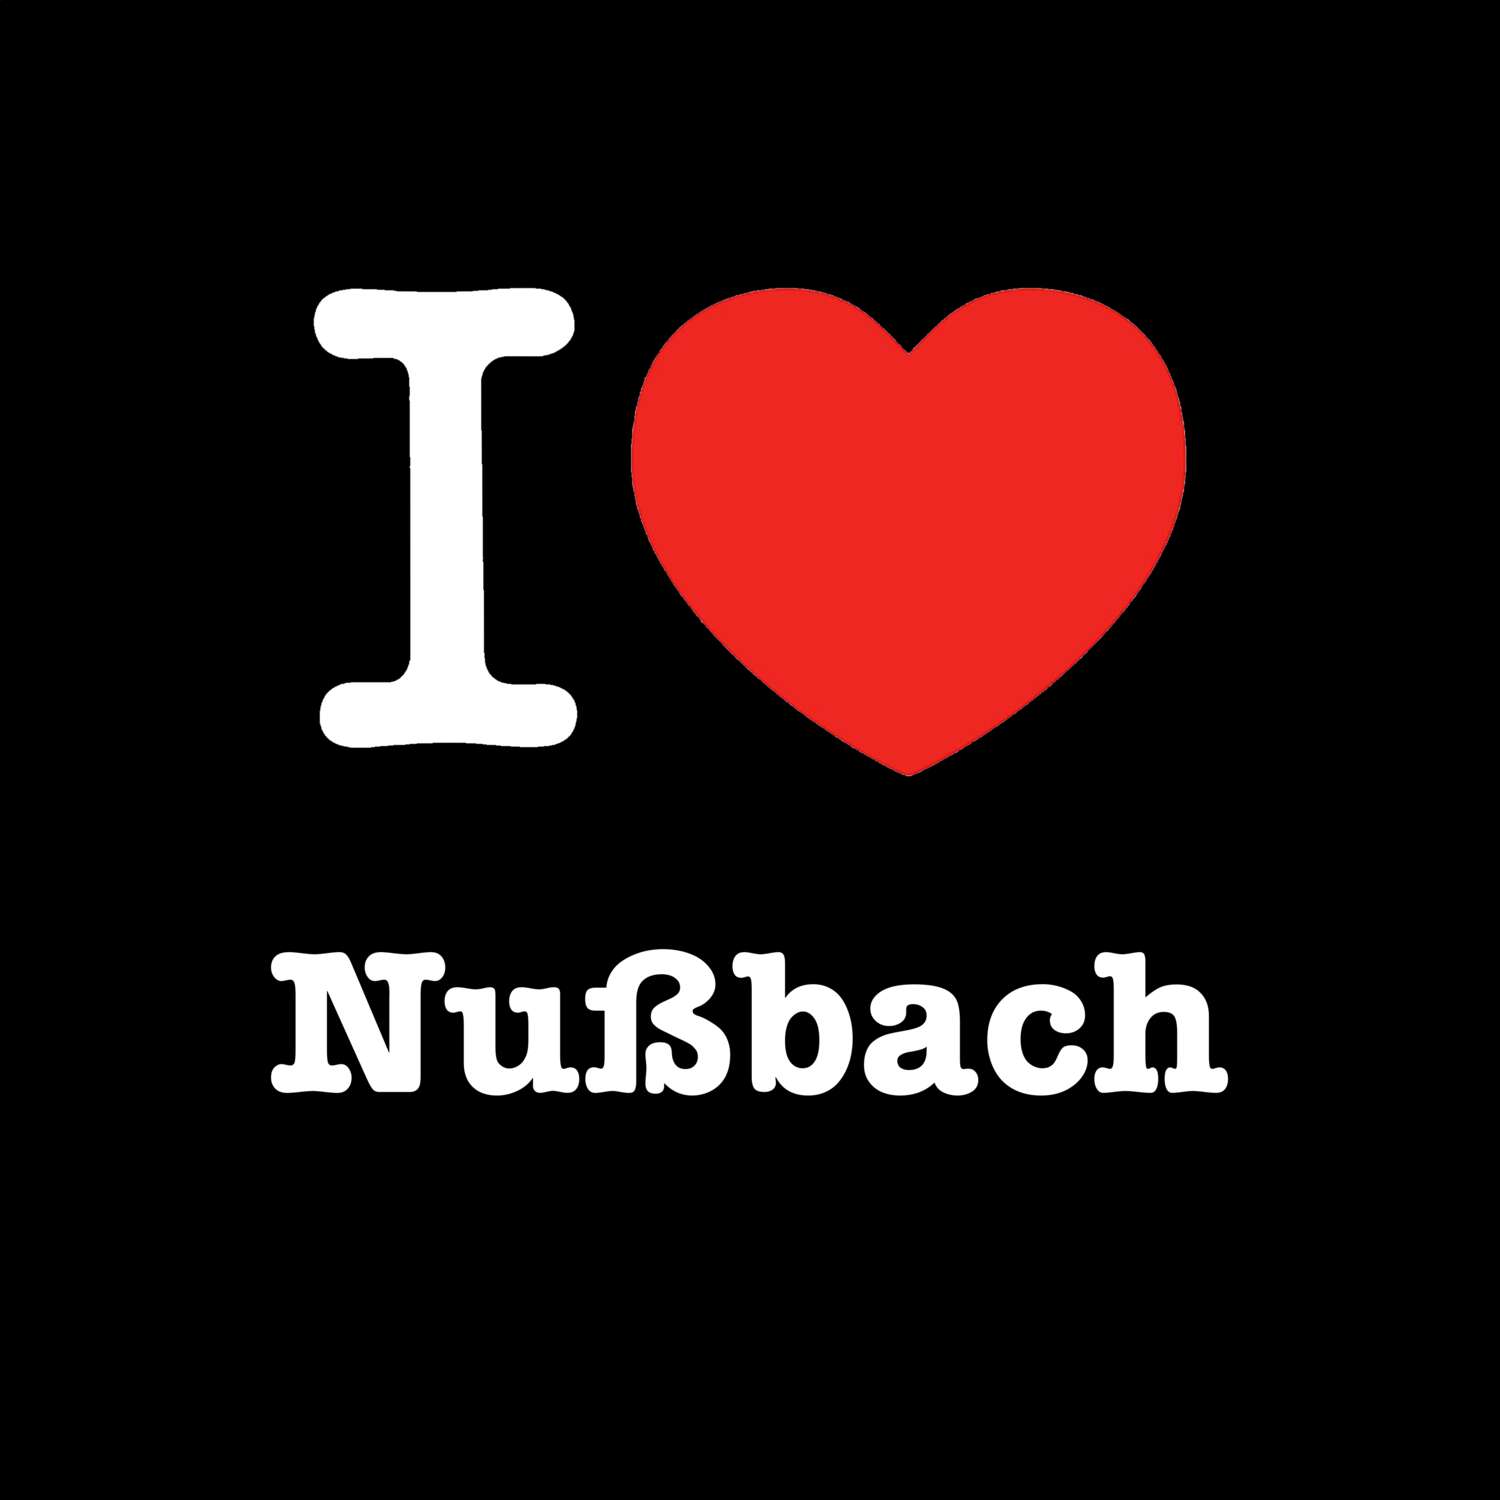 Nußbach T-Shirt »I love«